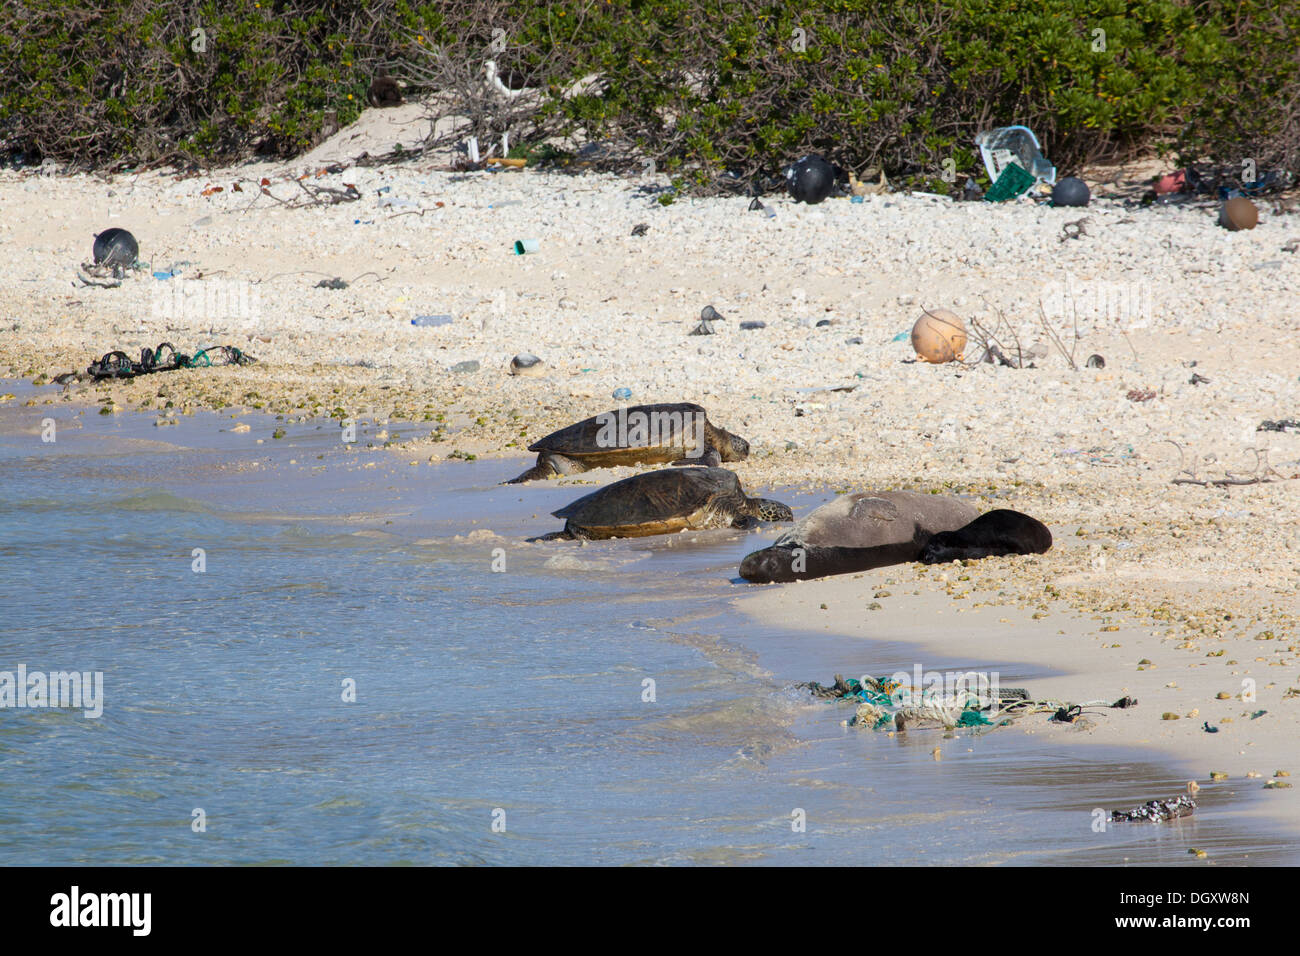 Hawaiian Monk Seals (Neomonachus schauinslandi) and Sea Turtles (Chelonia mydas) bask on a North Pacific island beach with marine debris Stock Photo